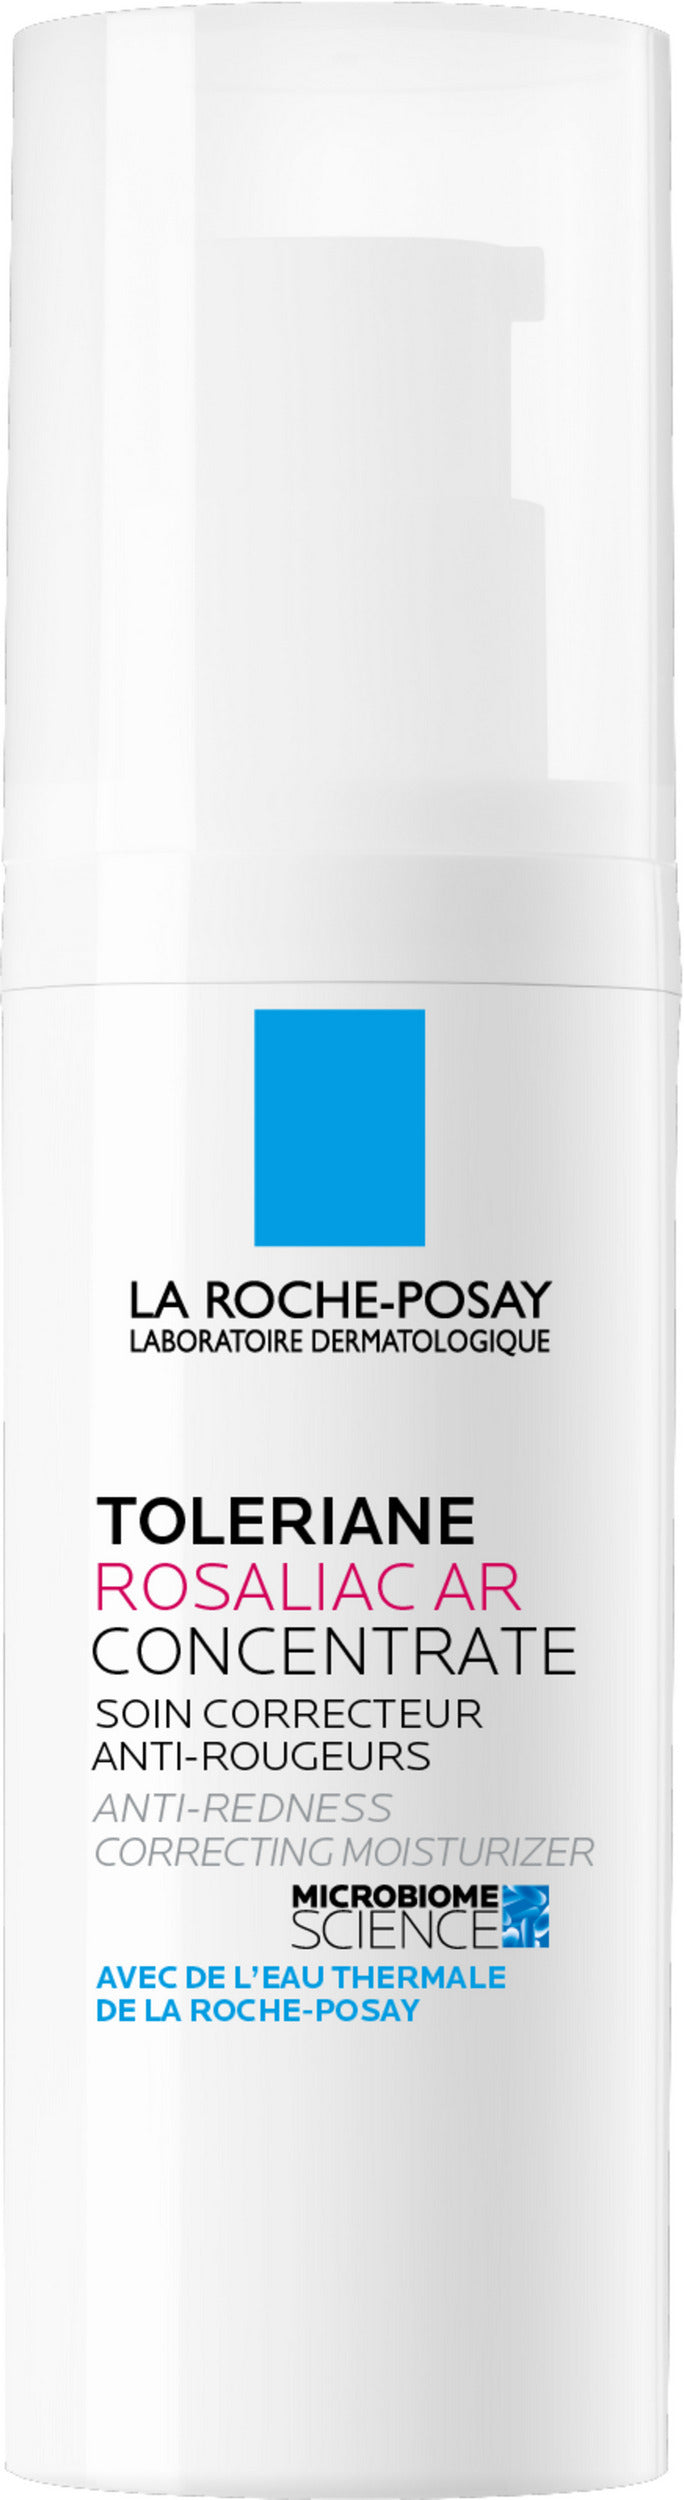 La Roche Posay Toleriane Rosaliac AR Concentrate for Dry, Redness-Prone Skin 40ml packshot